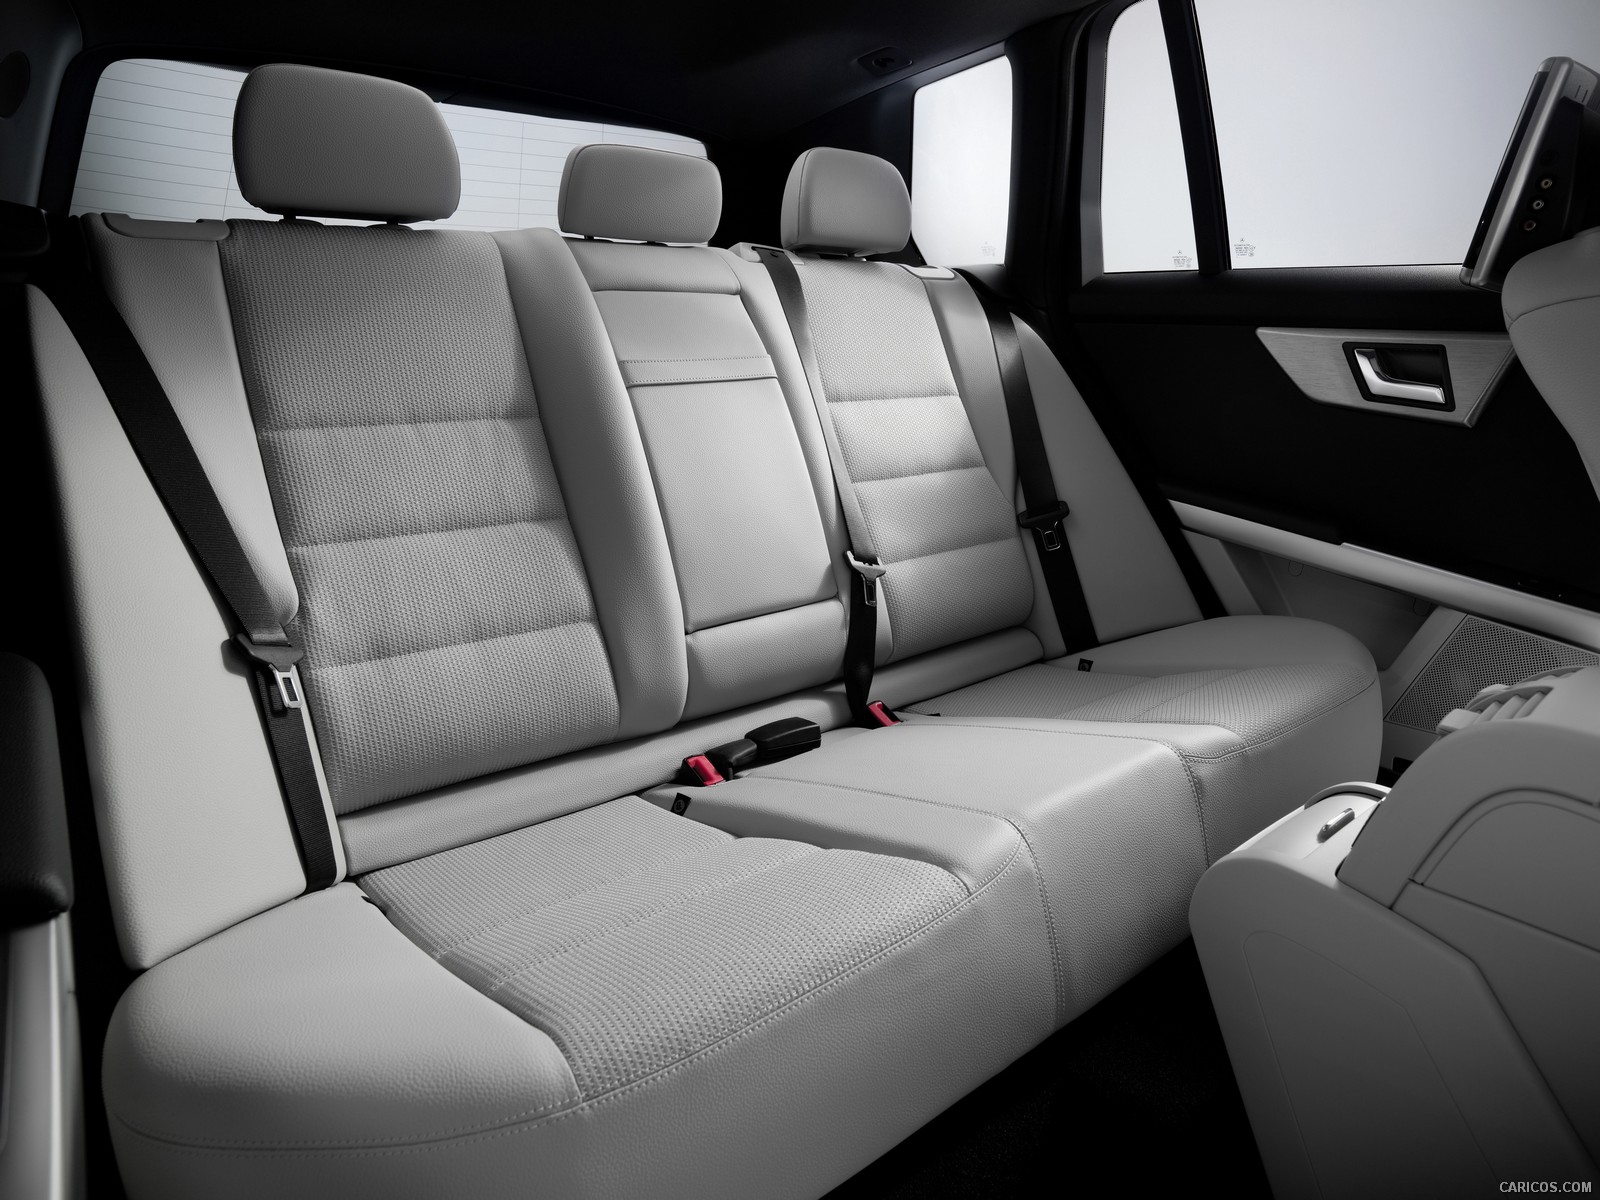 Mercedes-Benz GLK-Class  - Interior, Rear Seats, #220 of 351